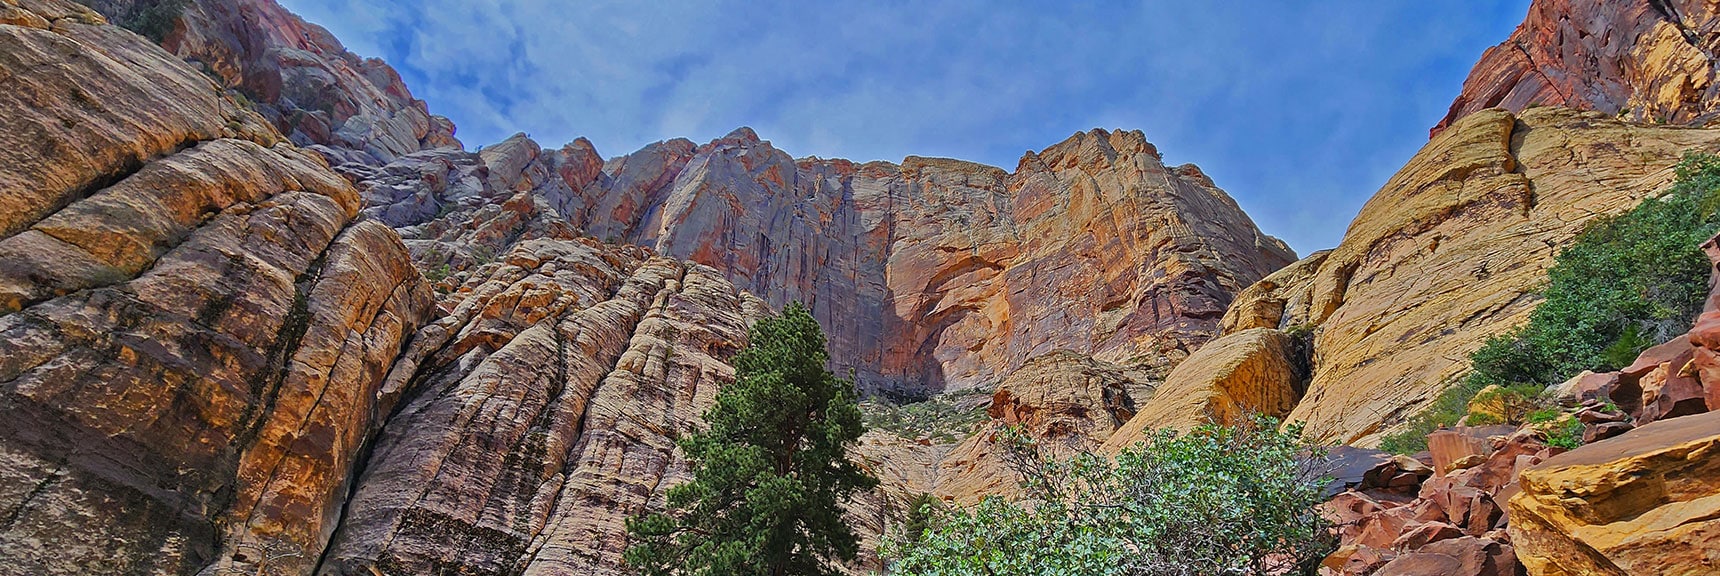 Rainbow Wall from Juniper Canyon Summit | Juniper Canyon | Red Rock Canyon National Conservation Area, Nevada | David Smith | LasVegasAreaTrails.com